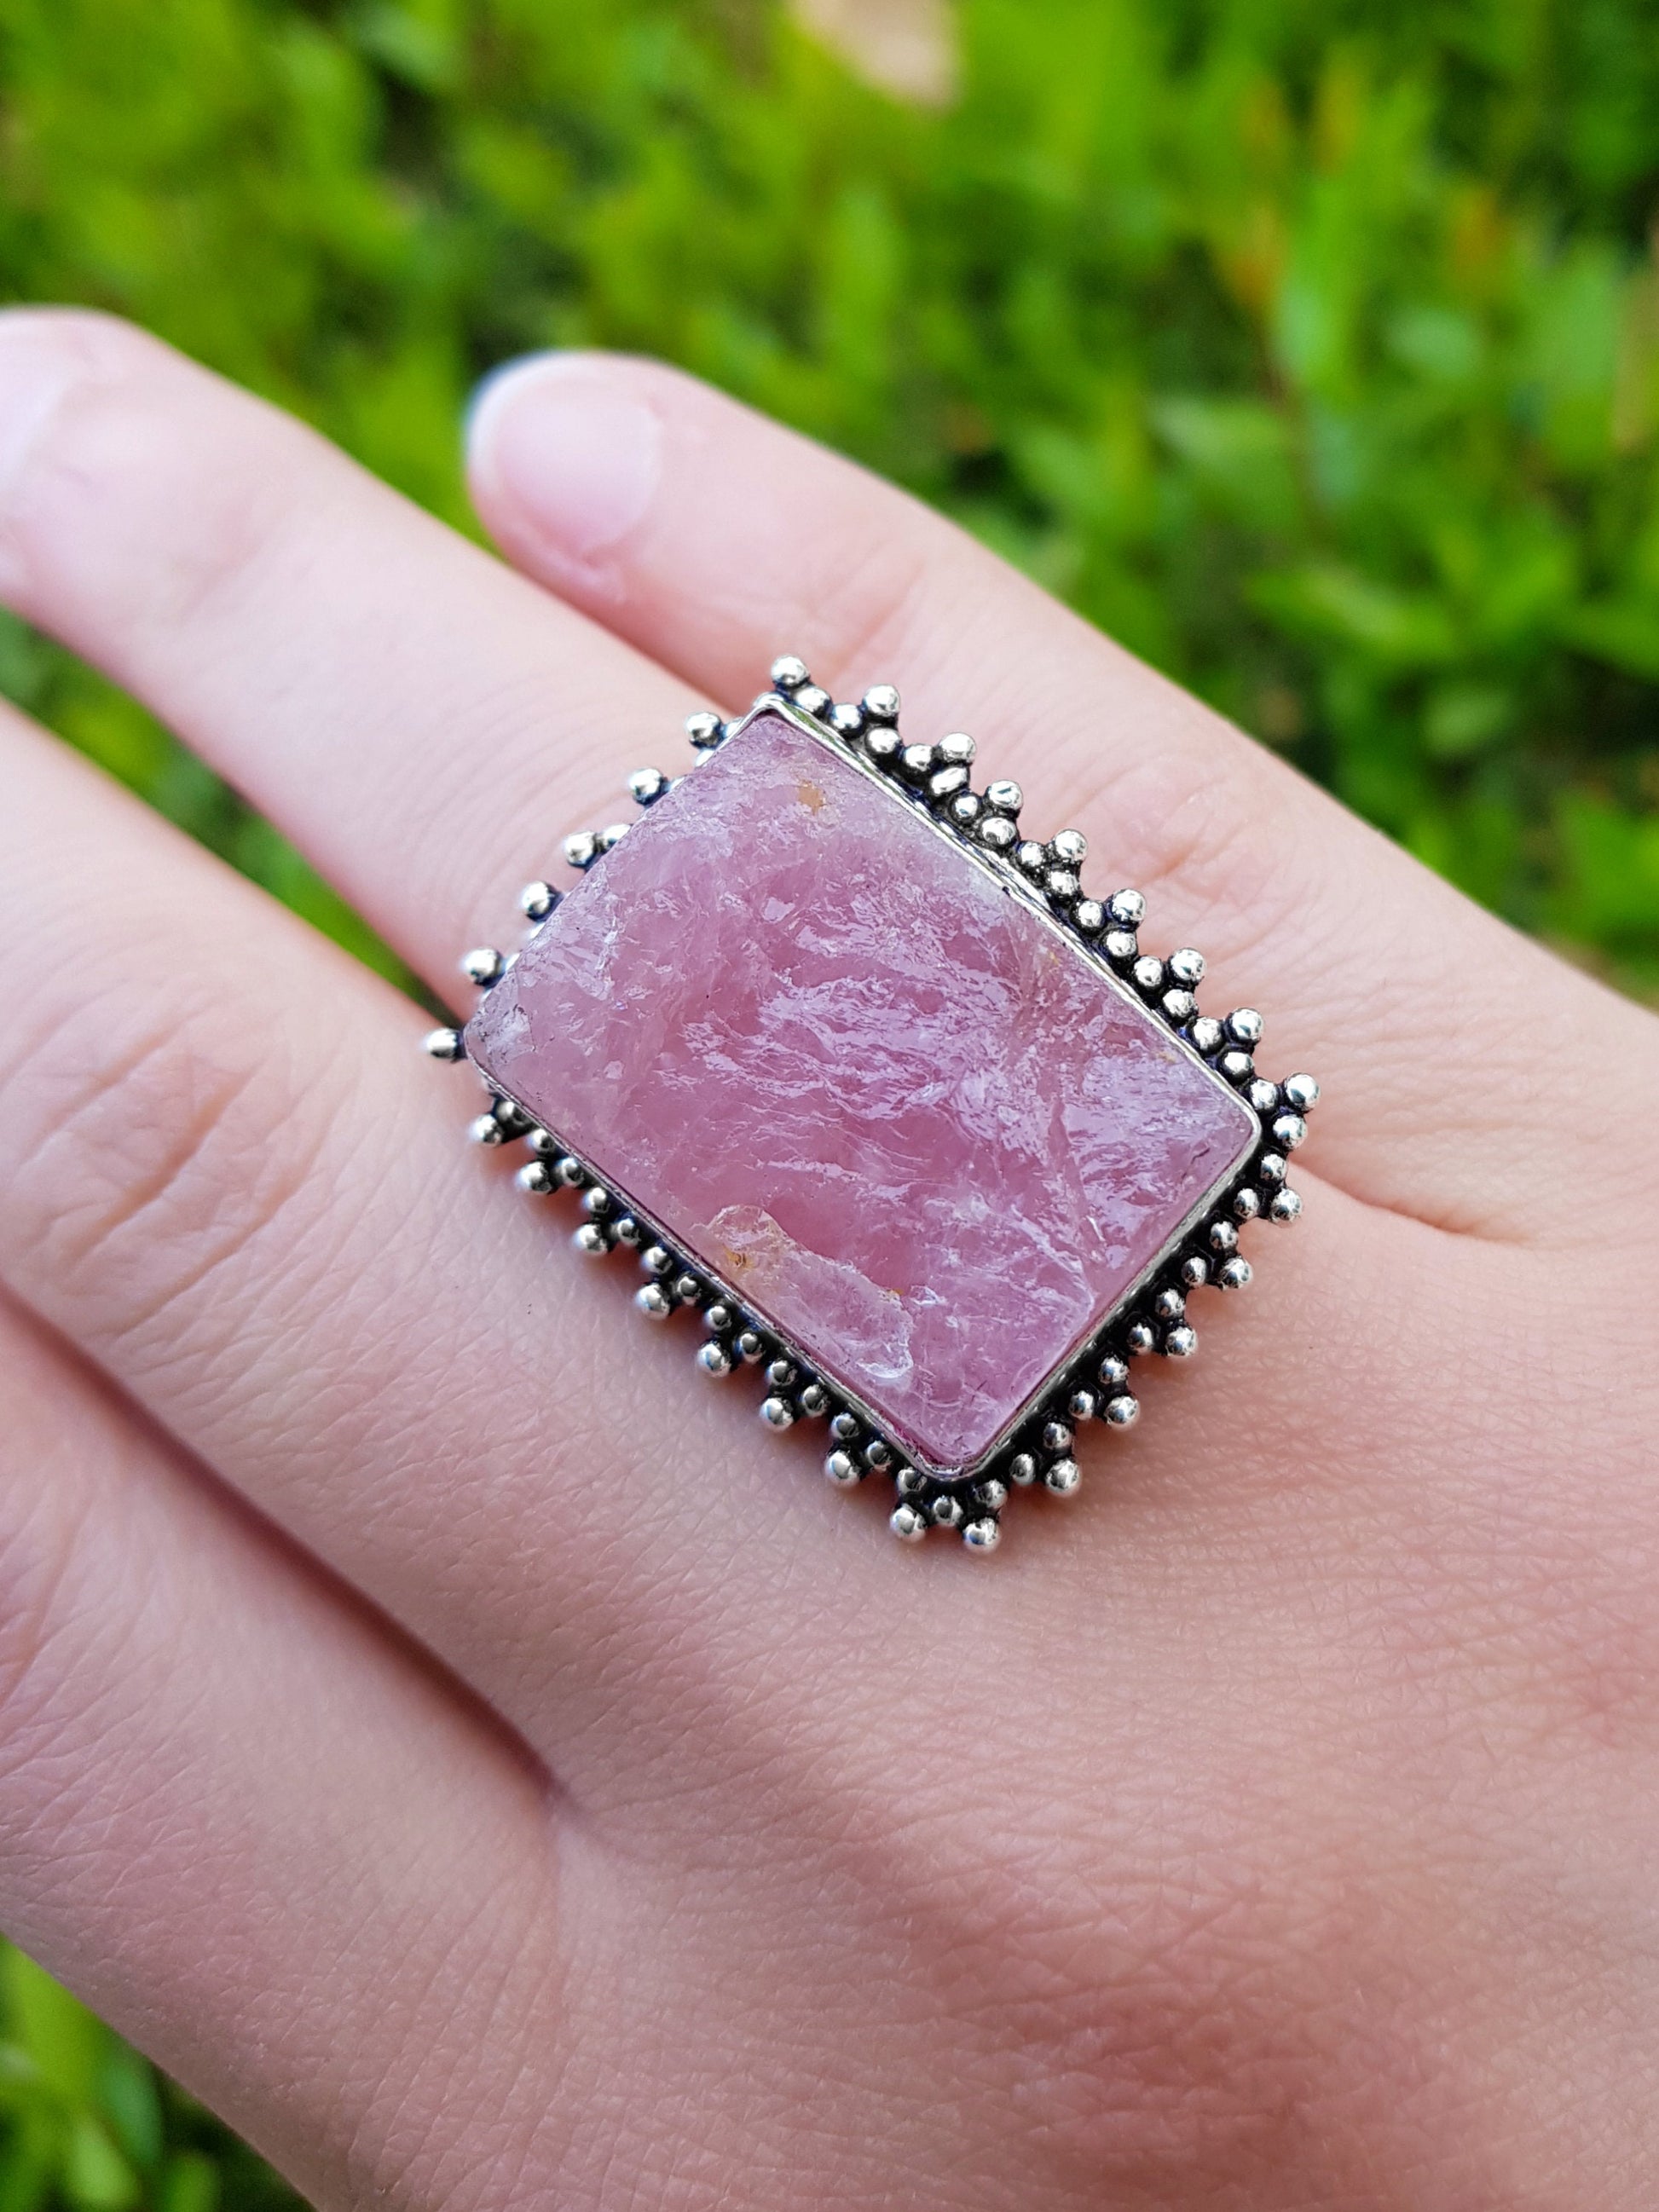 Rough Pink Rose Quartz Gemstone Ring In Sterling Silver Size US 7 3/4 Big Statement Ring